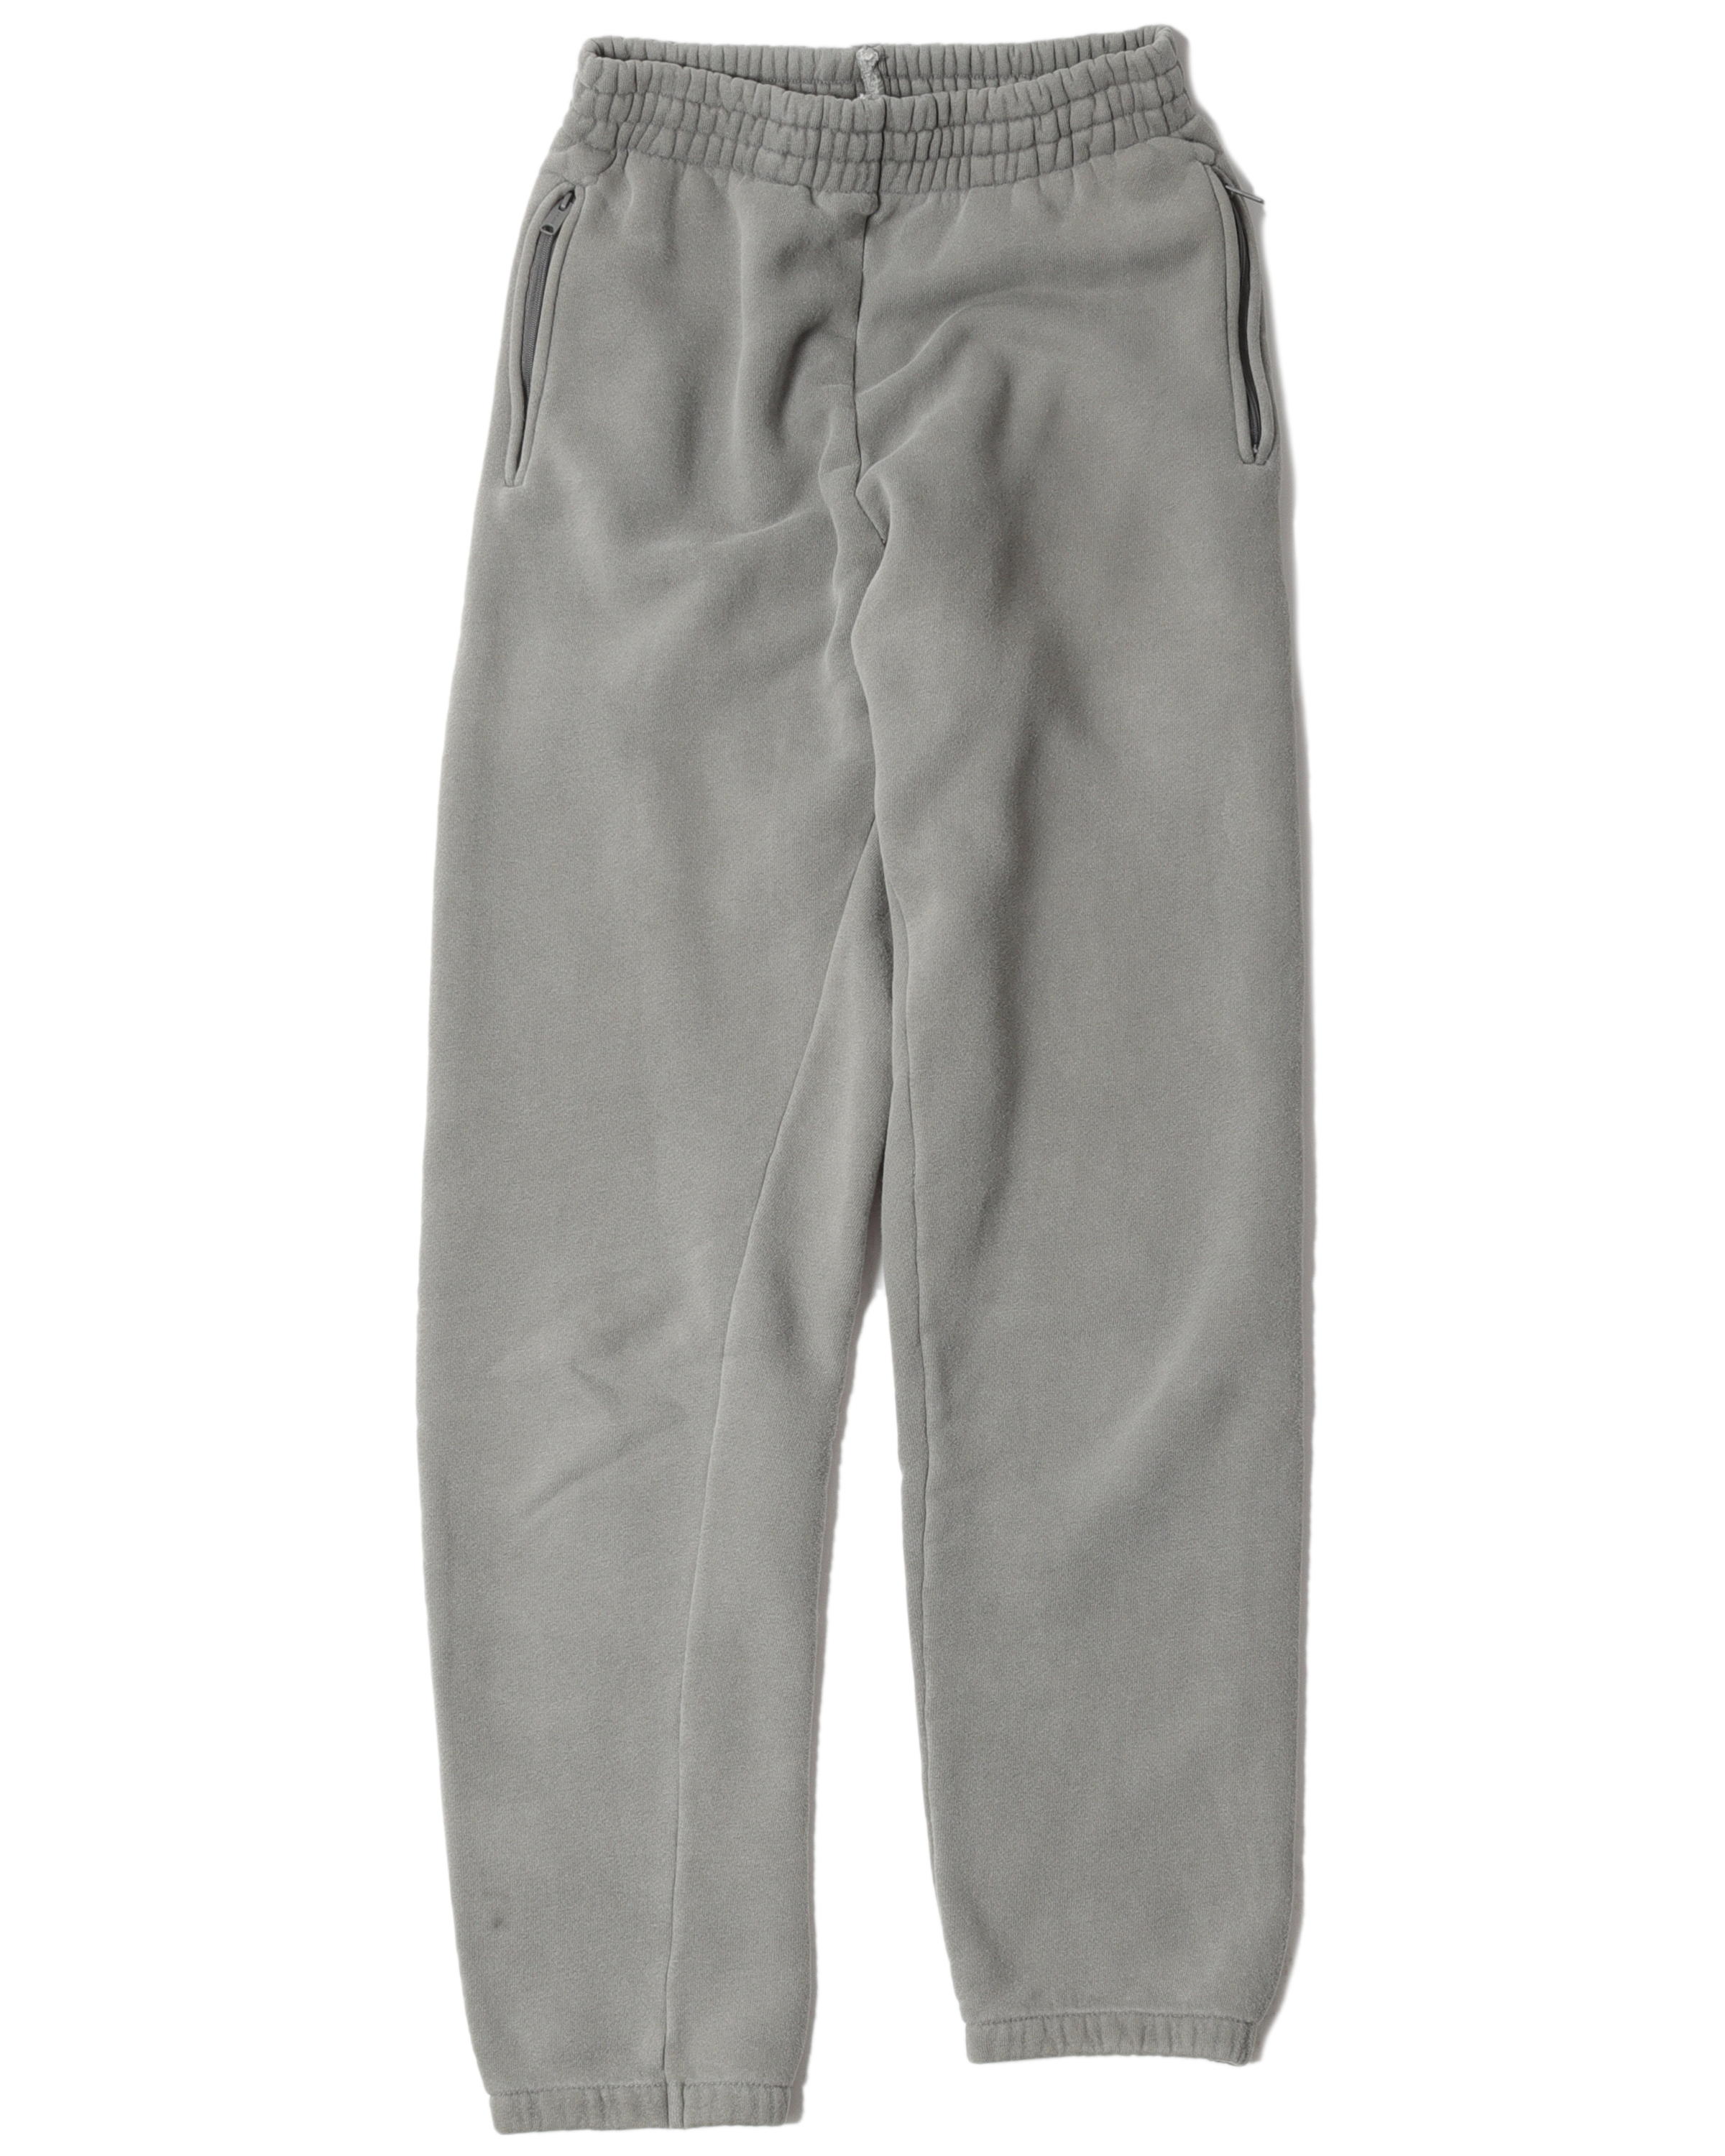 Grey Zip Pocket Shorts